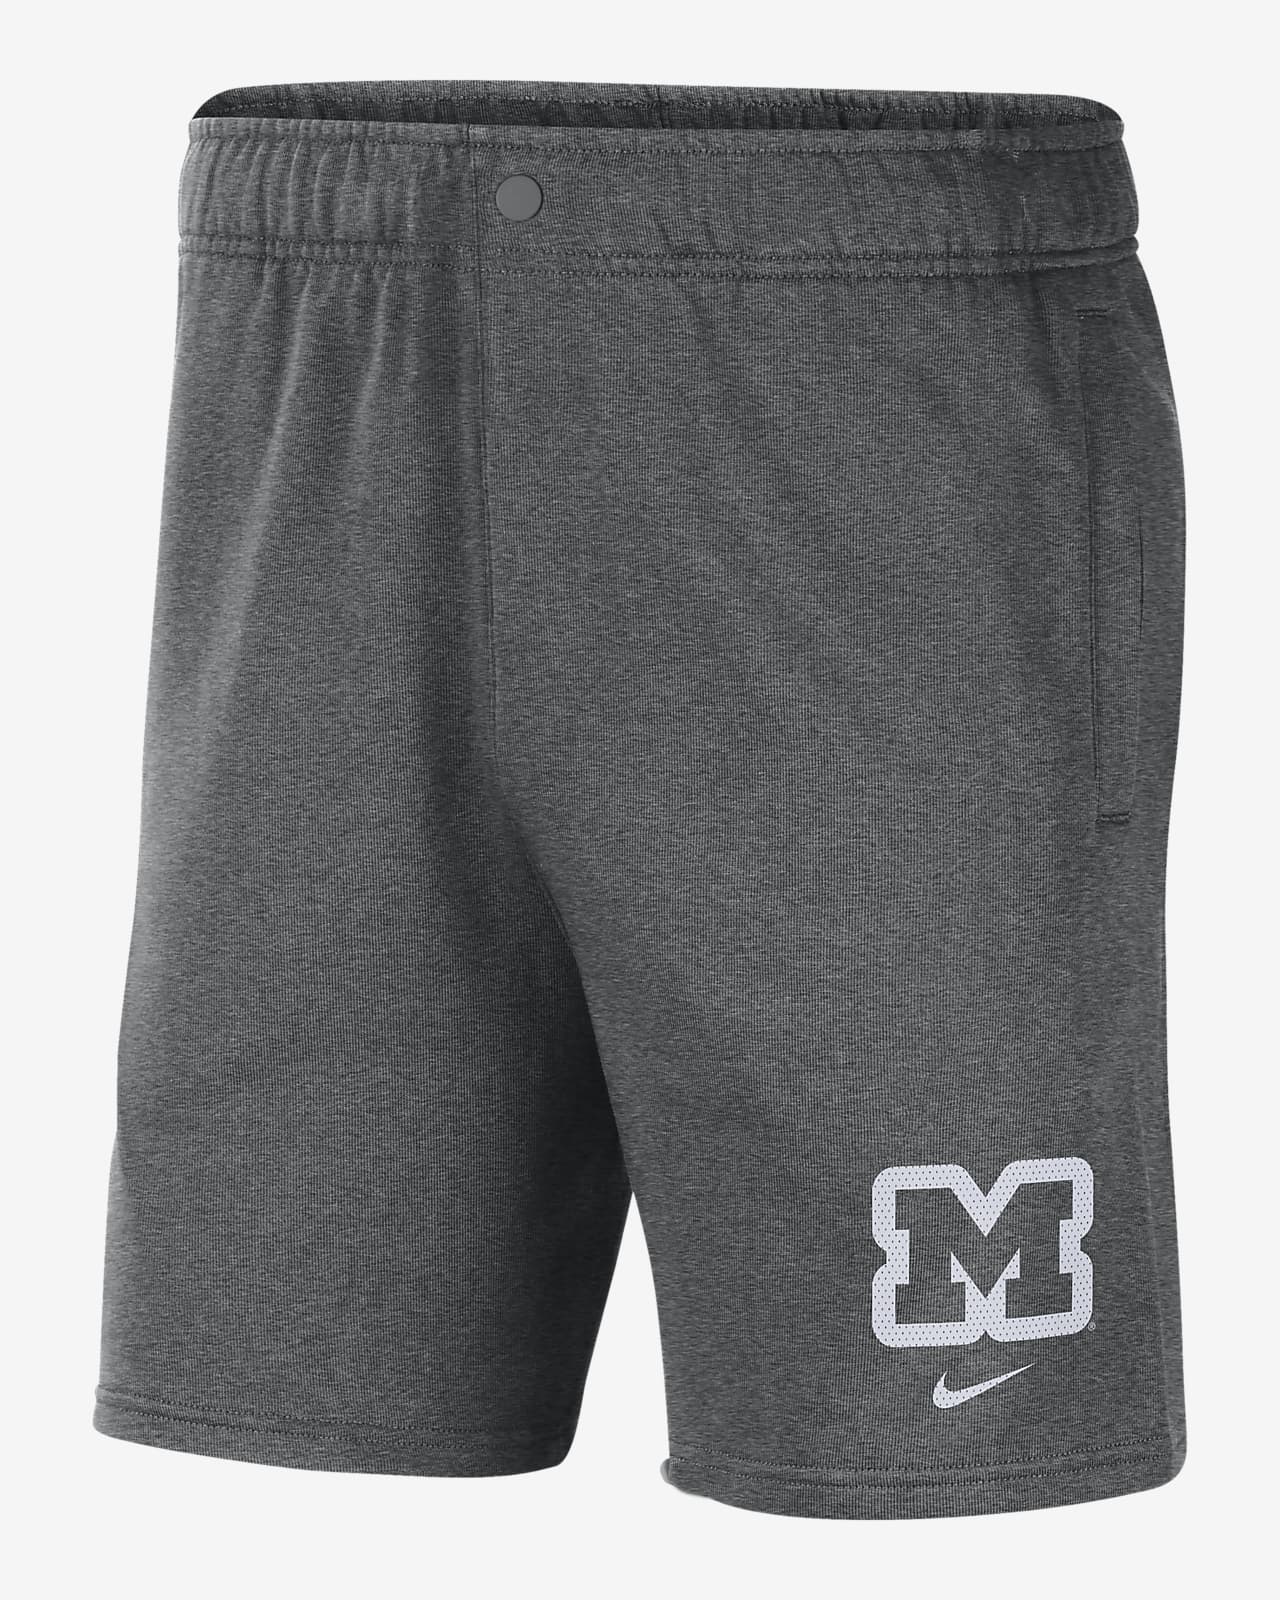 Michigan Men's Nike College Fleece Shorts